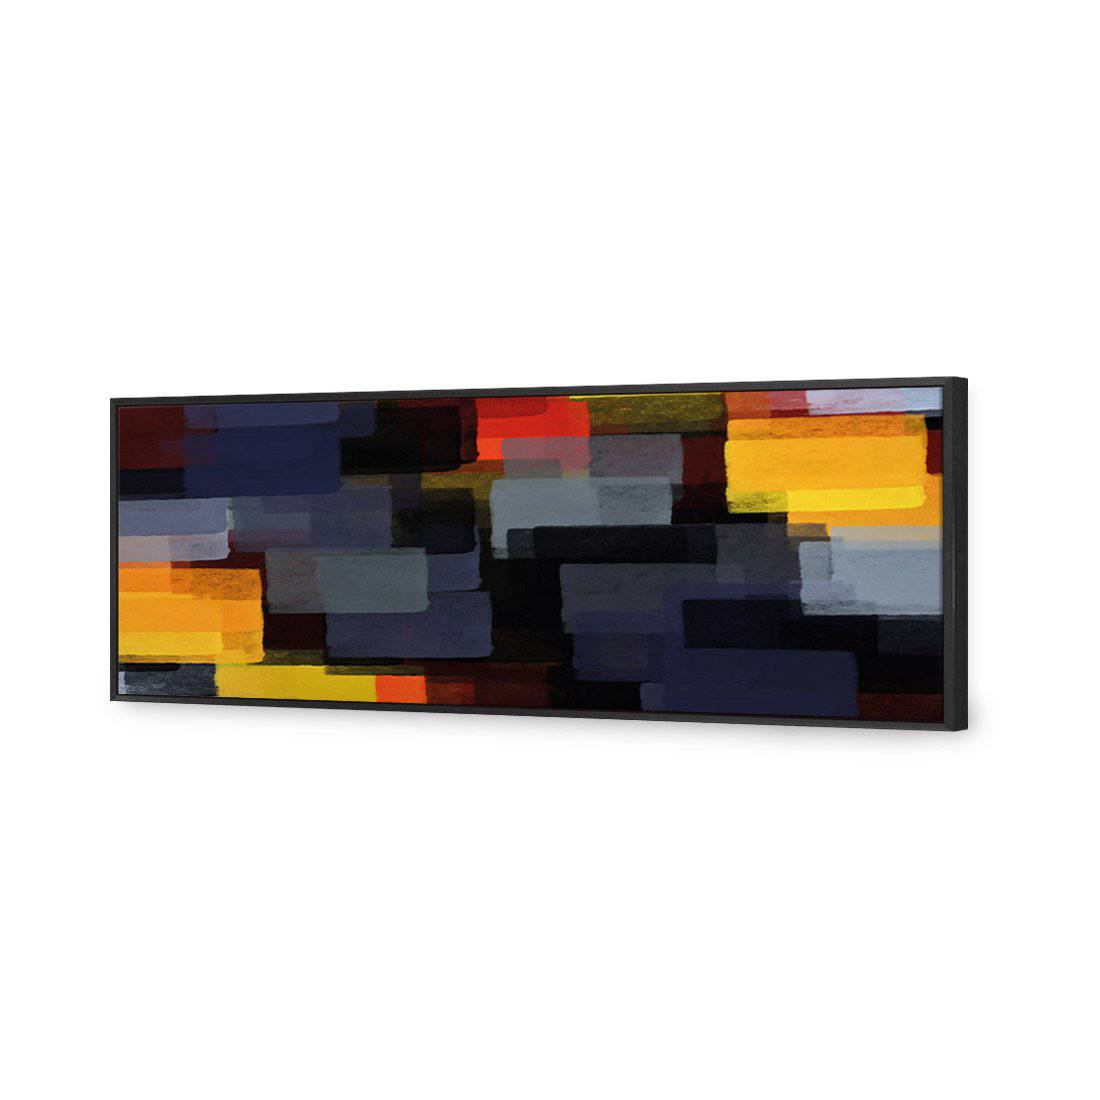 Colliding Blocks Canvas Art-Canvas-Wall Art Designs-60x20cm-Canvas - Black Frame-Wall Art Designs